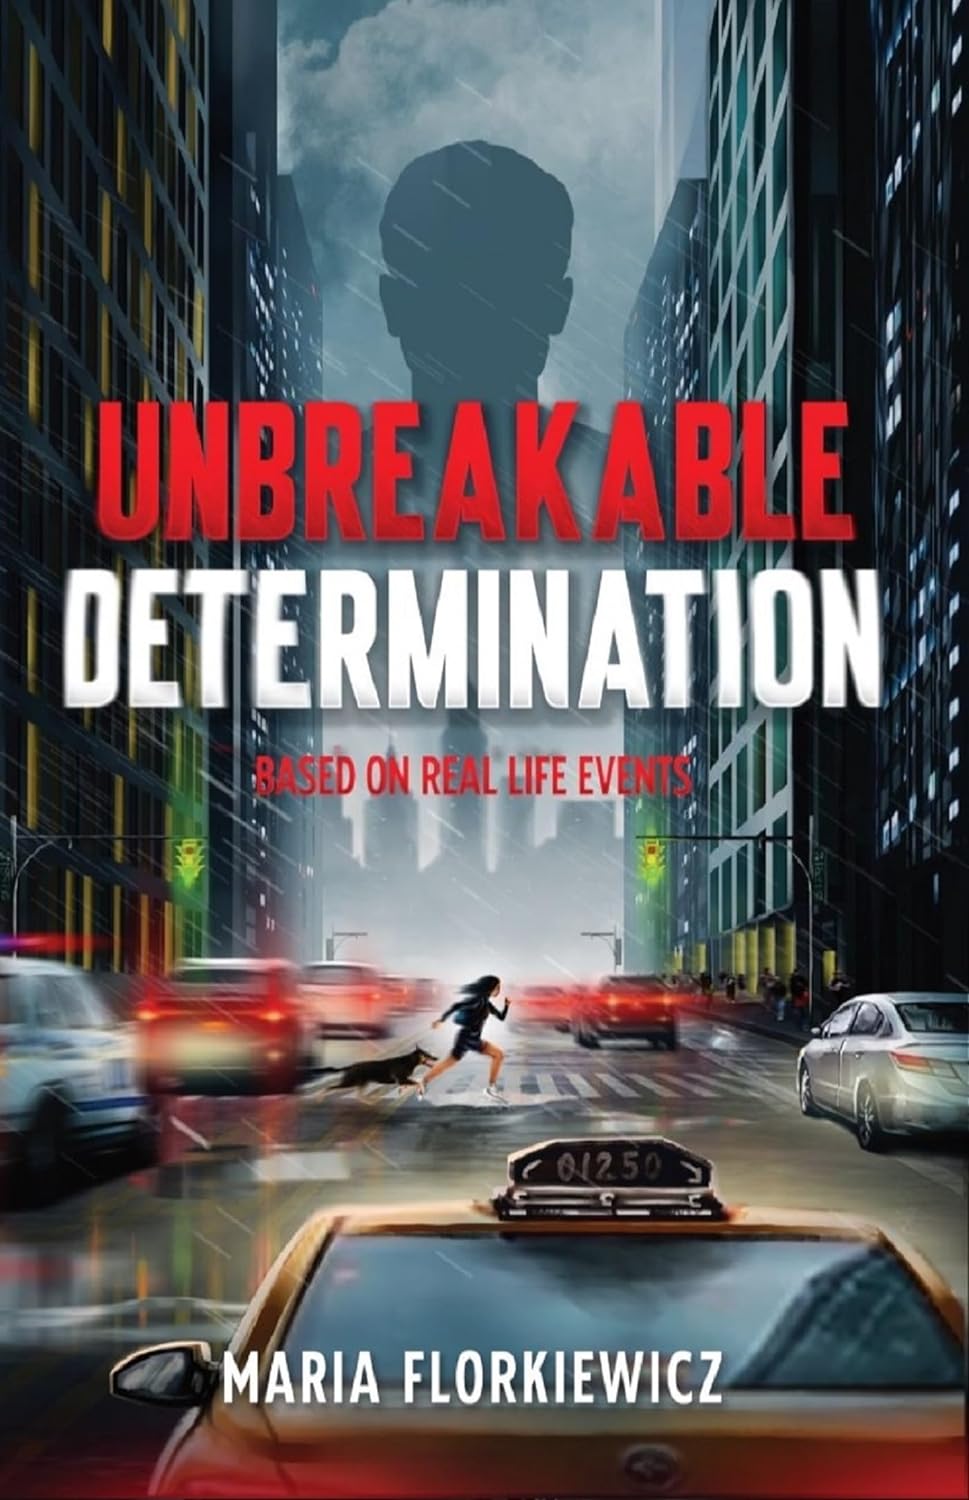 Unbreakable Determination by Maria Florkiewicz